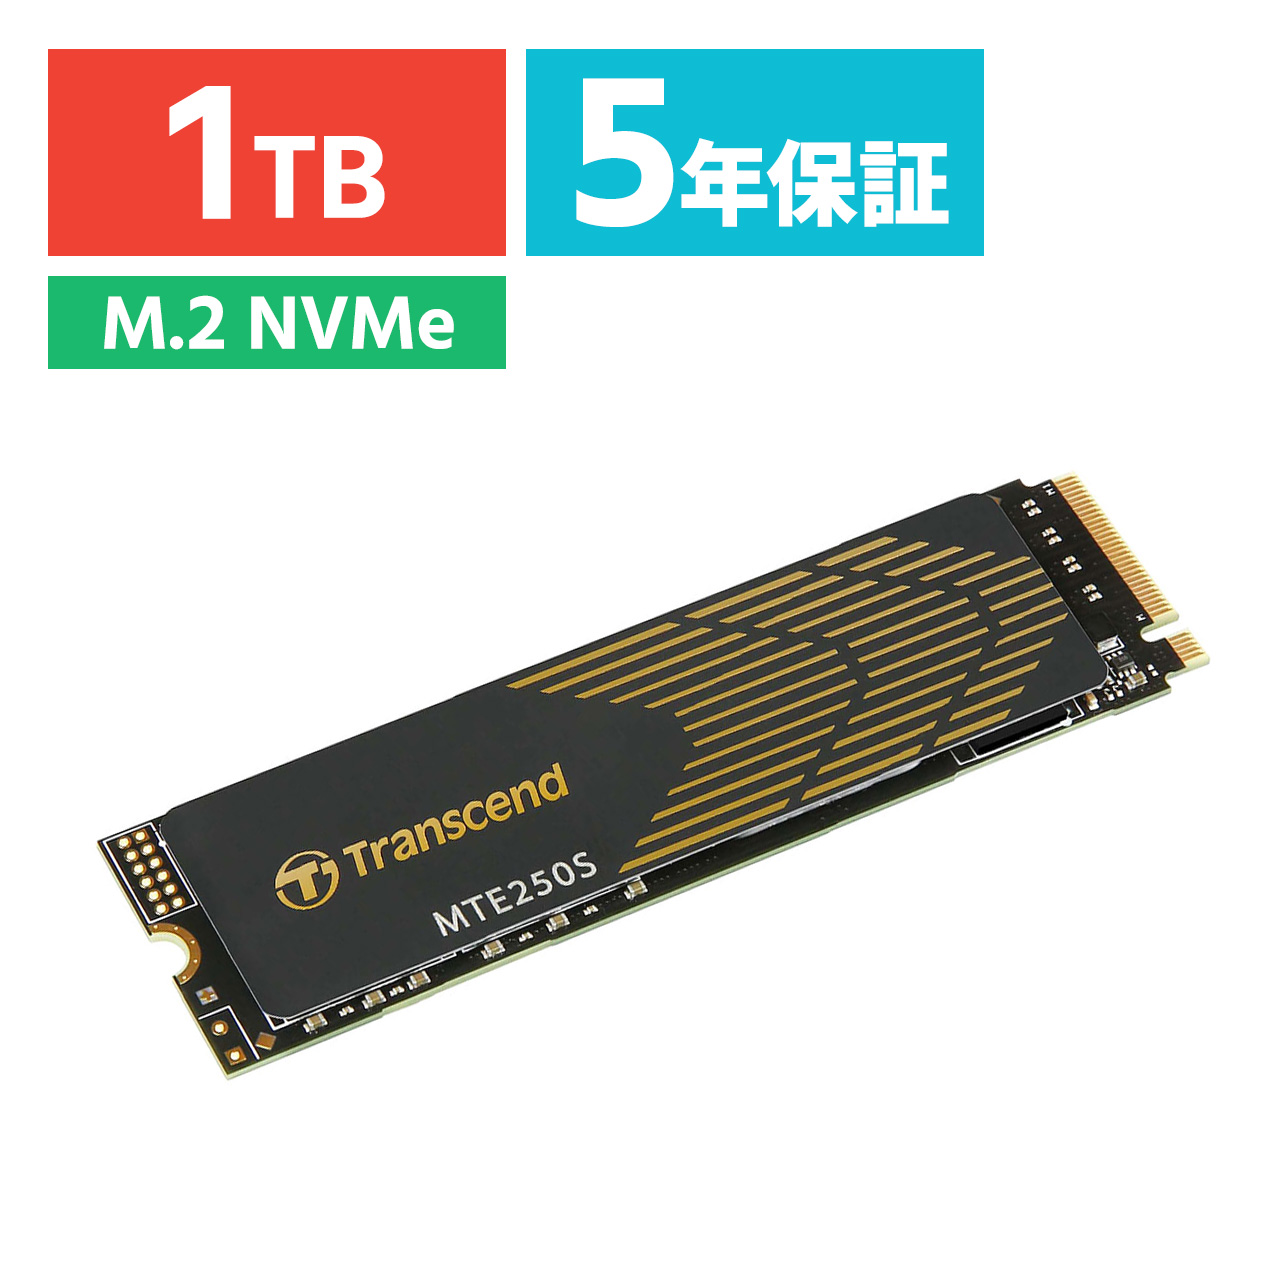 SSD １TB（新品未開封）25インチSATA3型番